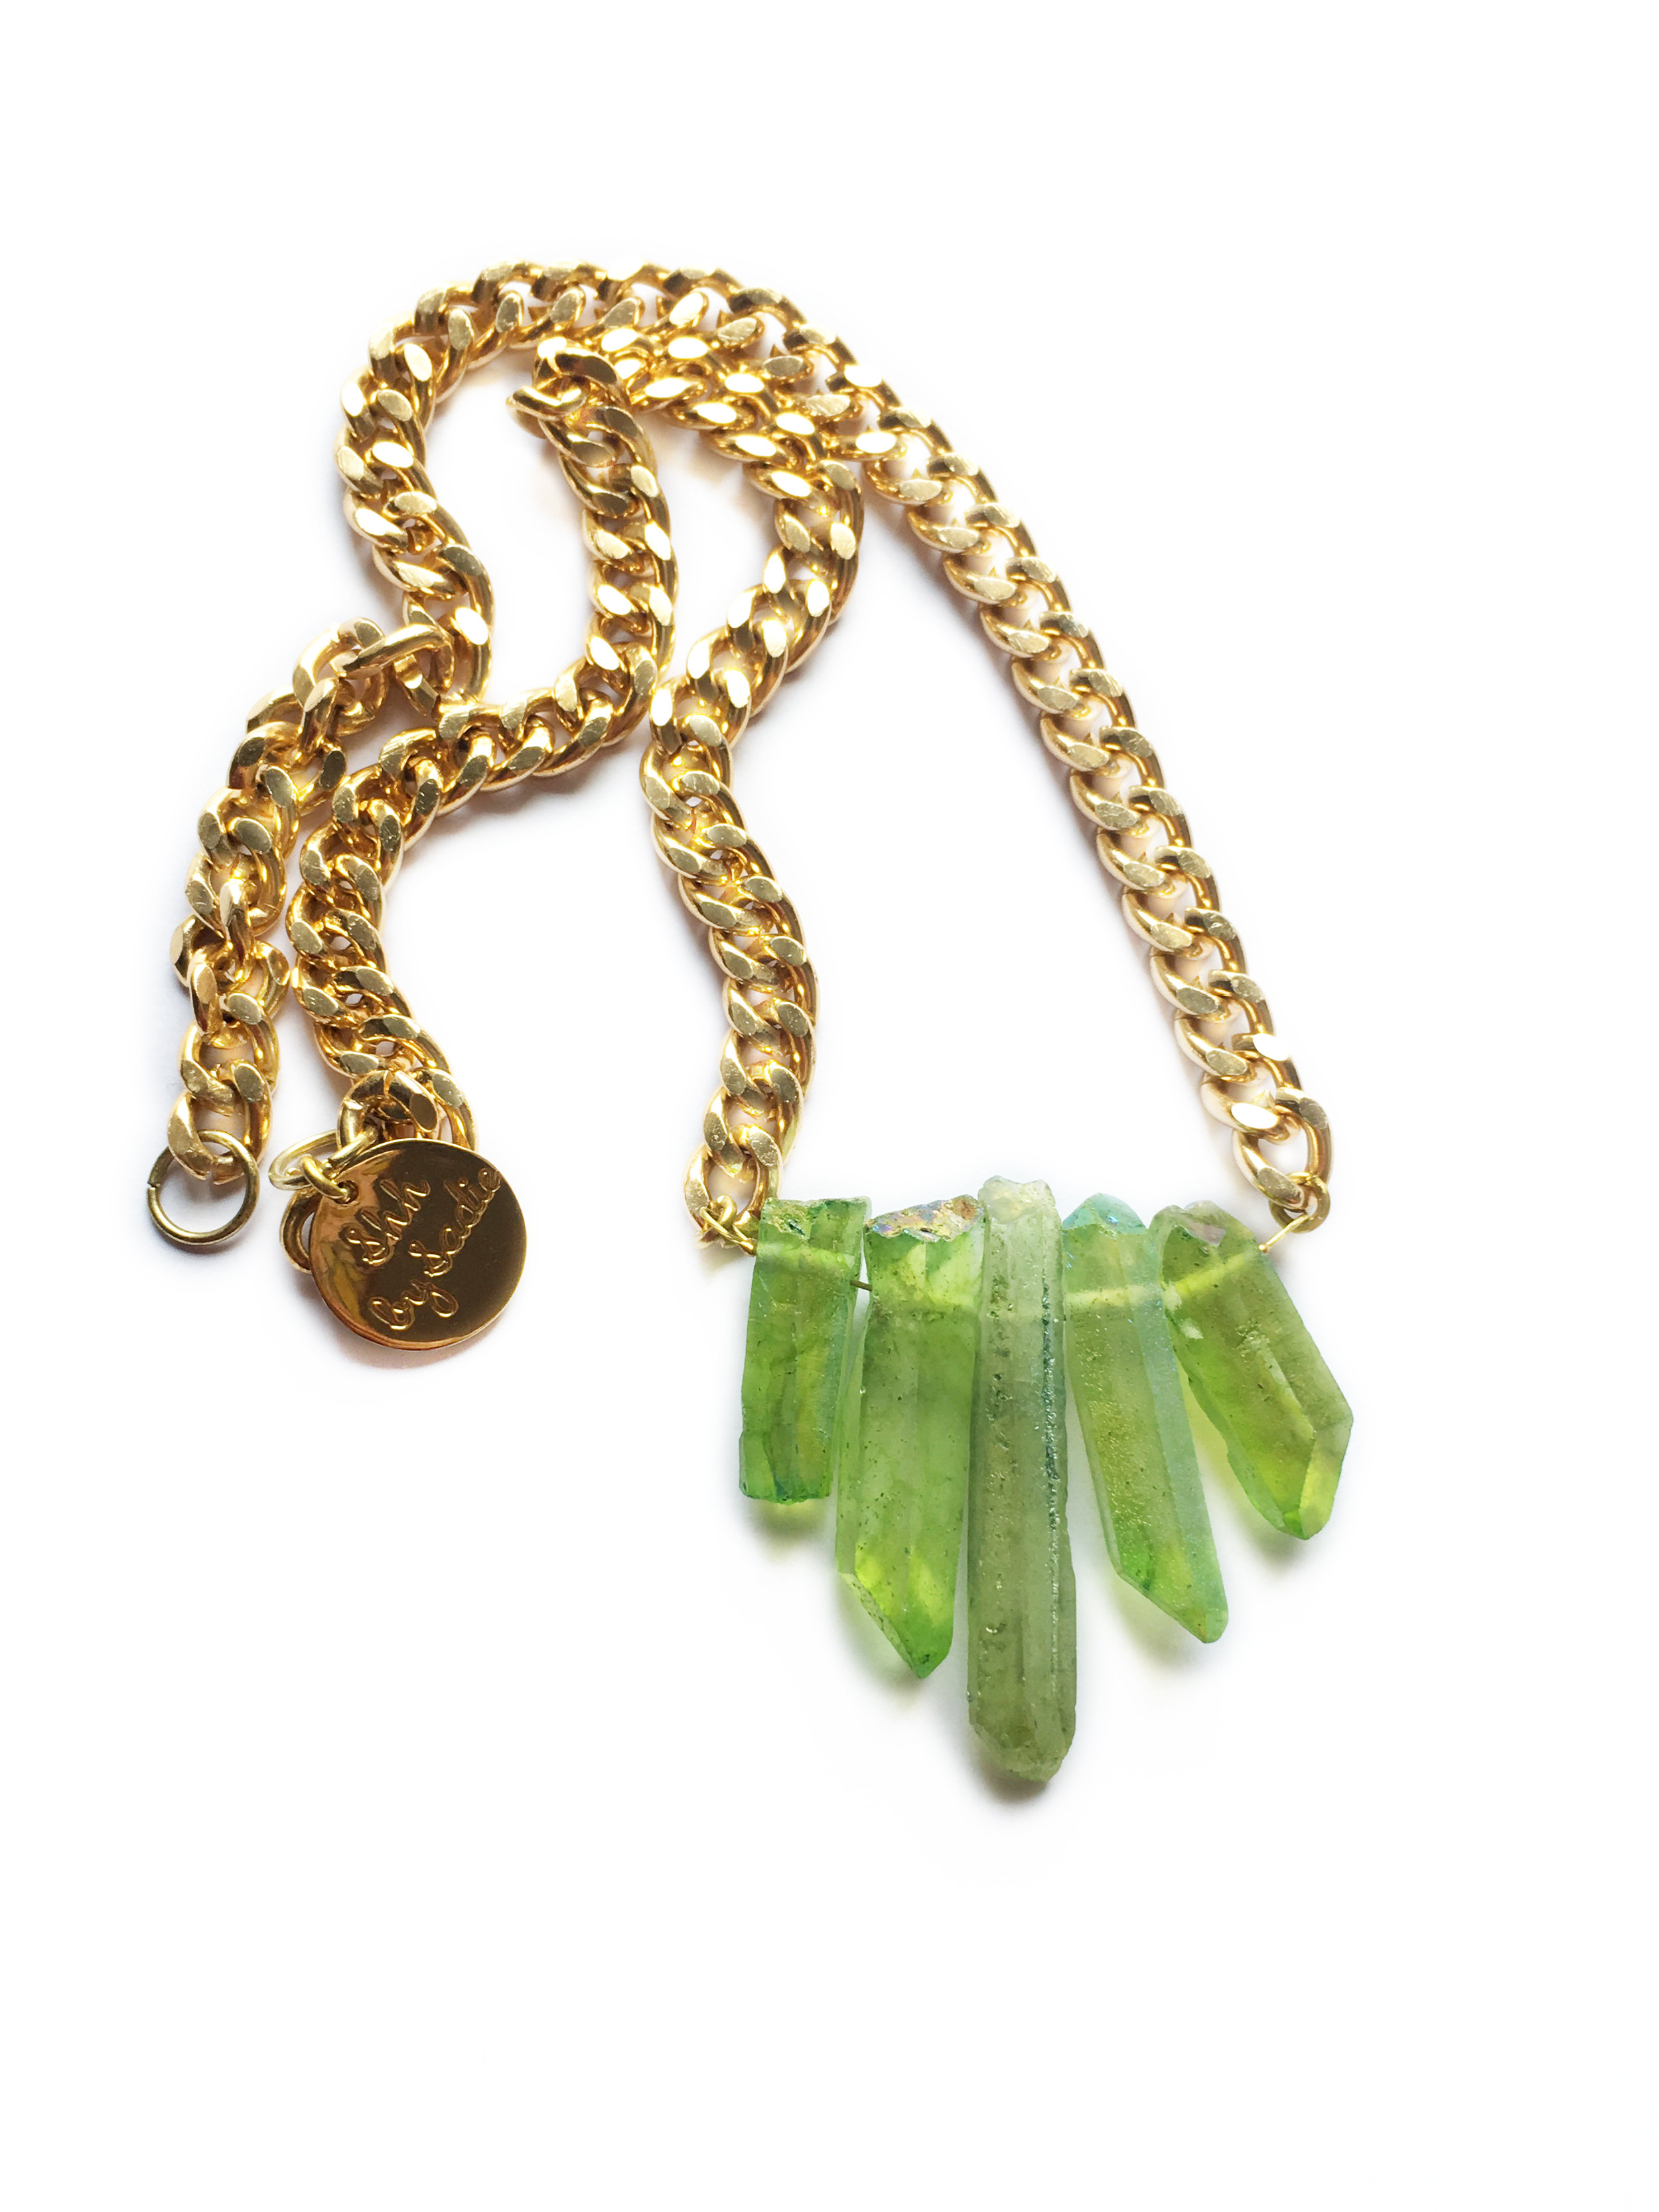 Green crystal quartz necklace handmade in England by British jewellery designer shh by sadie